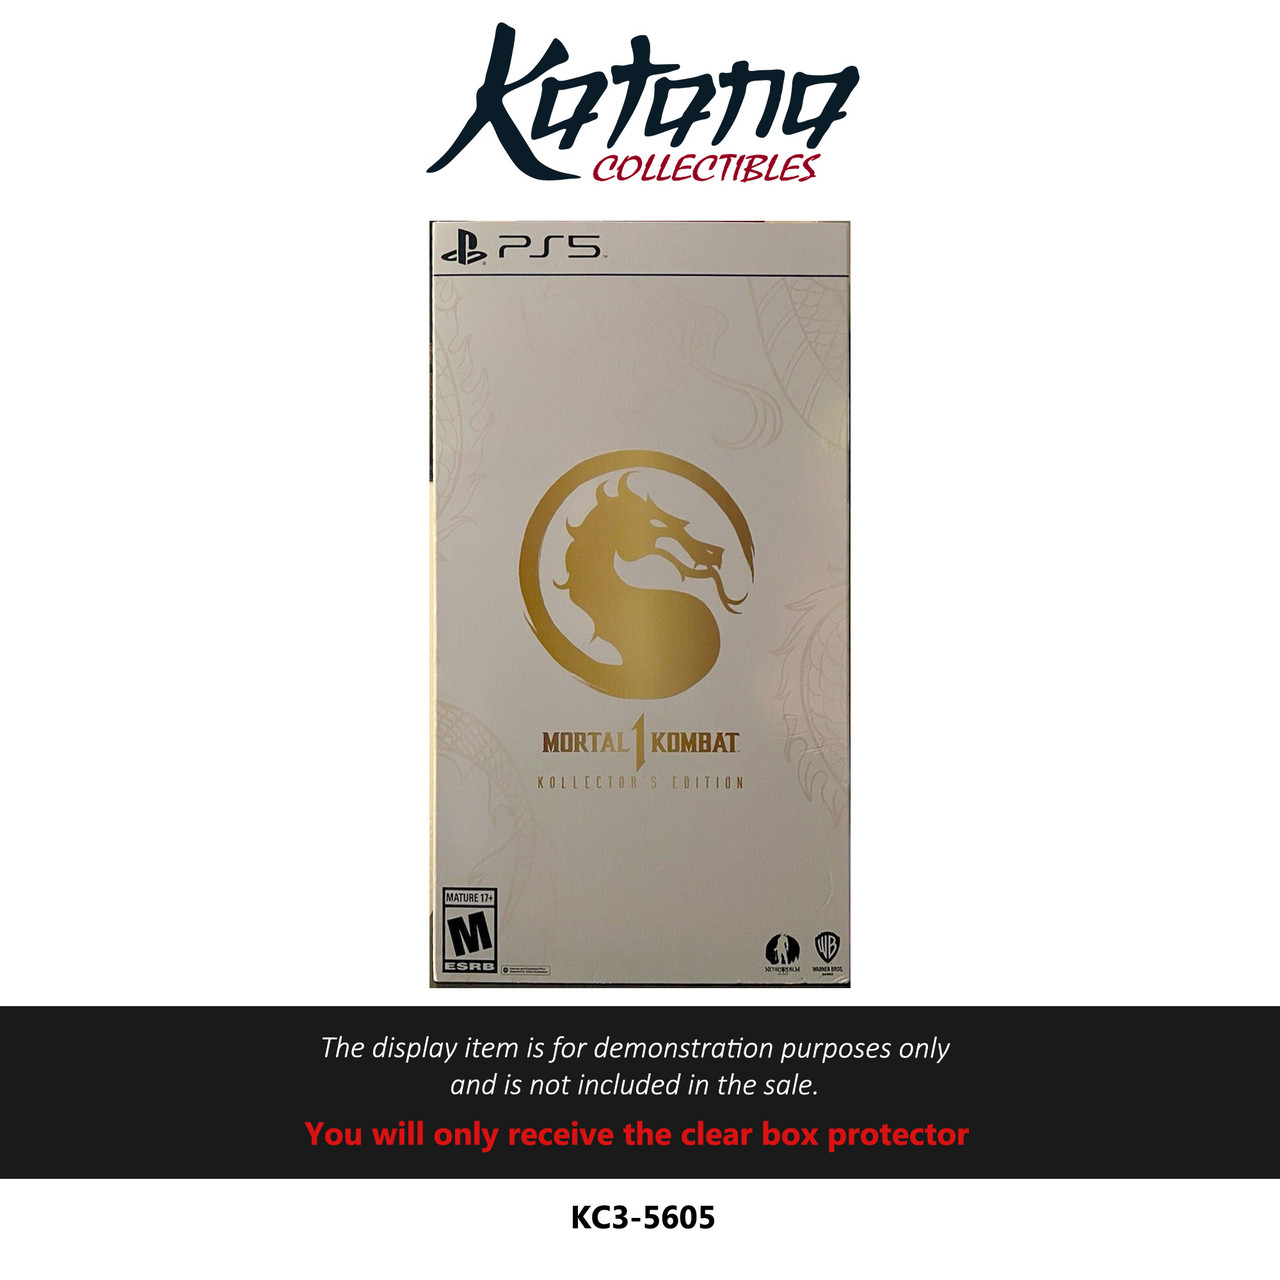 Katana Collectibles Protector For PS5 Mortal Kombat, Collector Edition